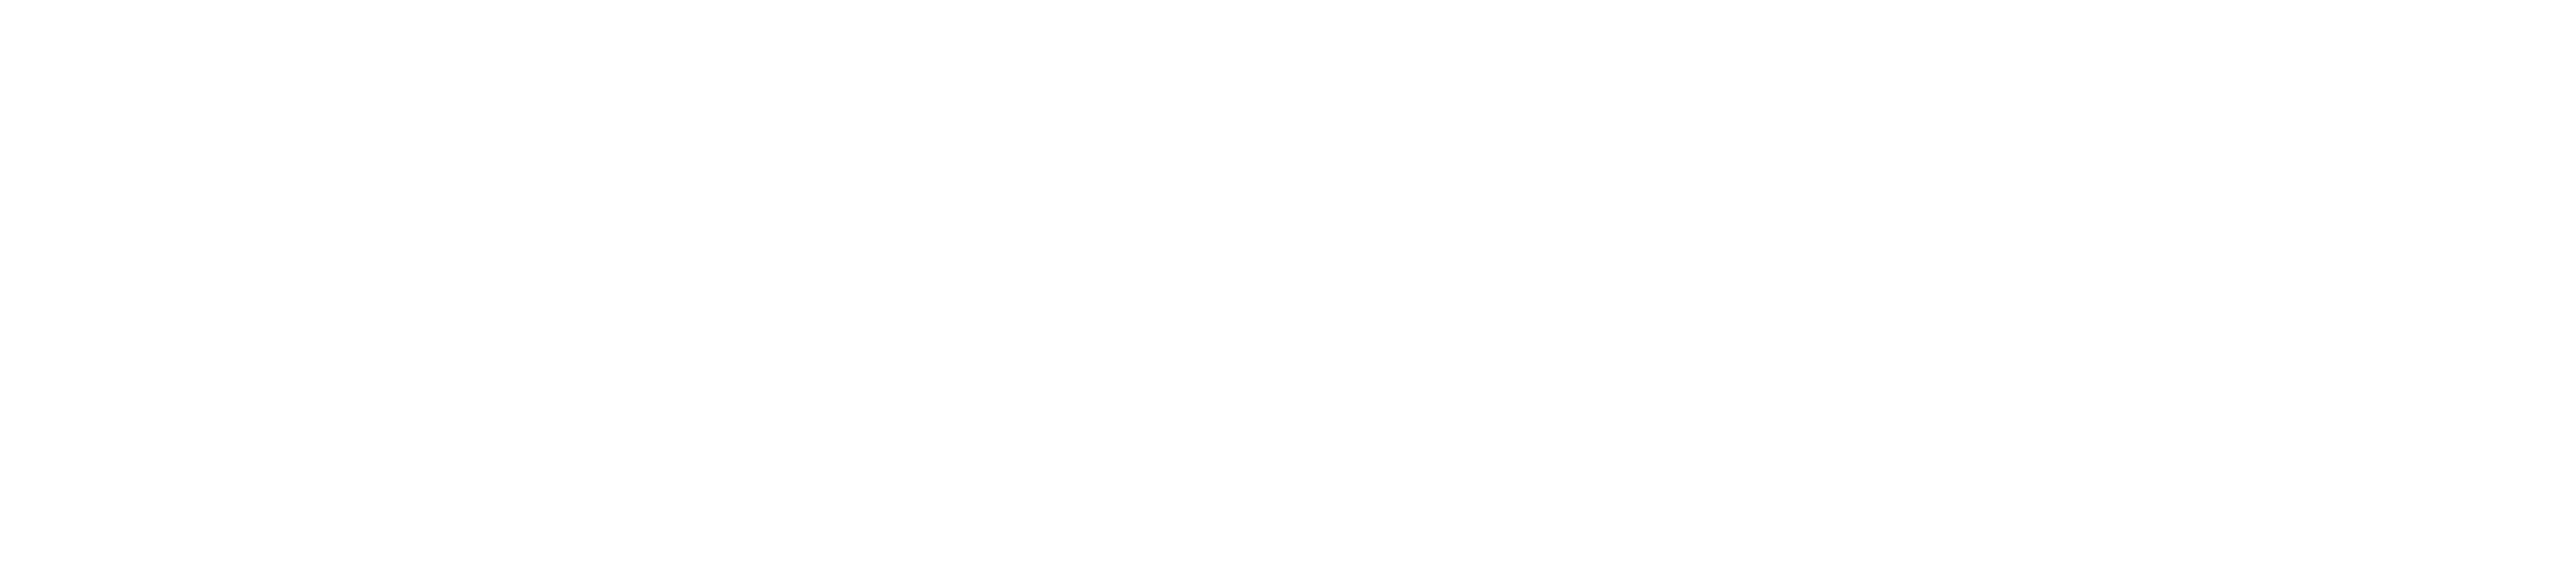 Sidekicks logo